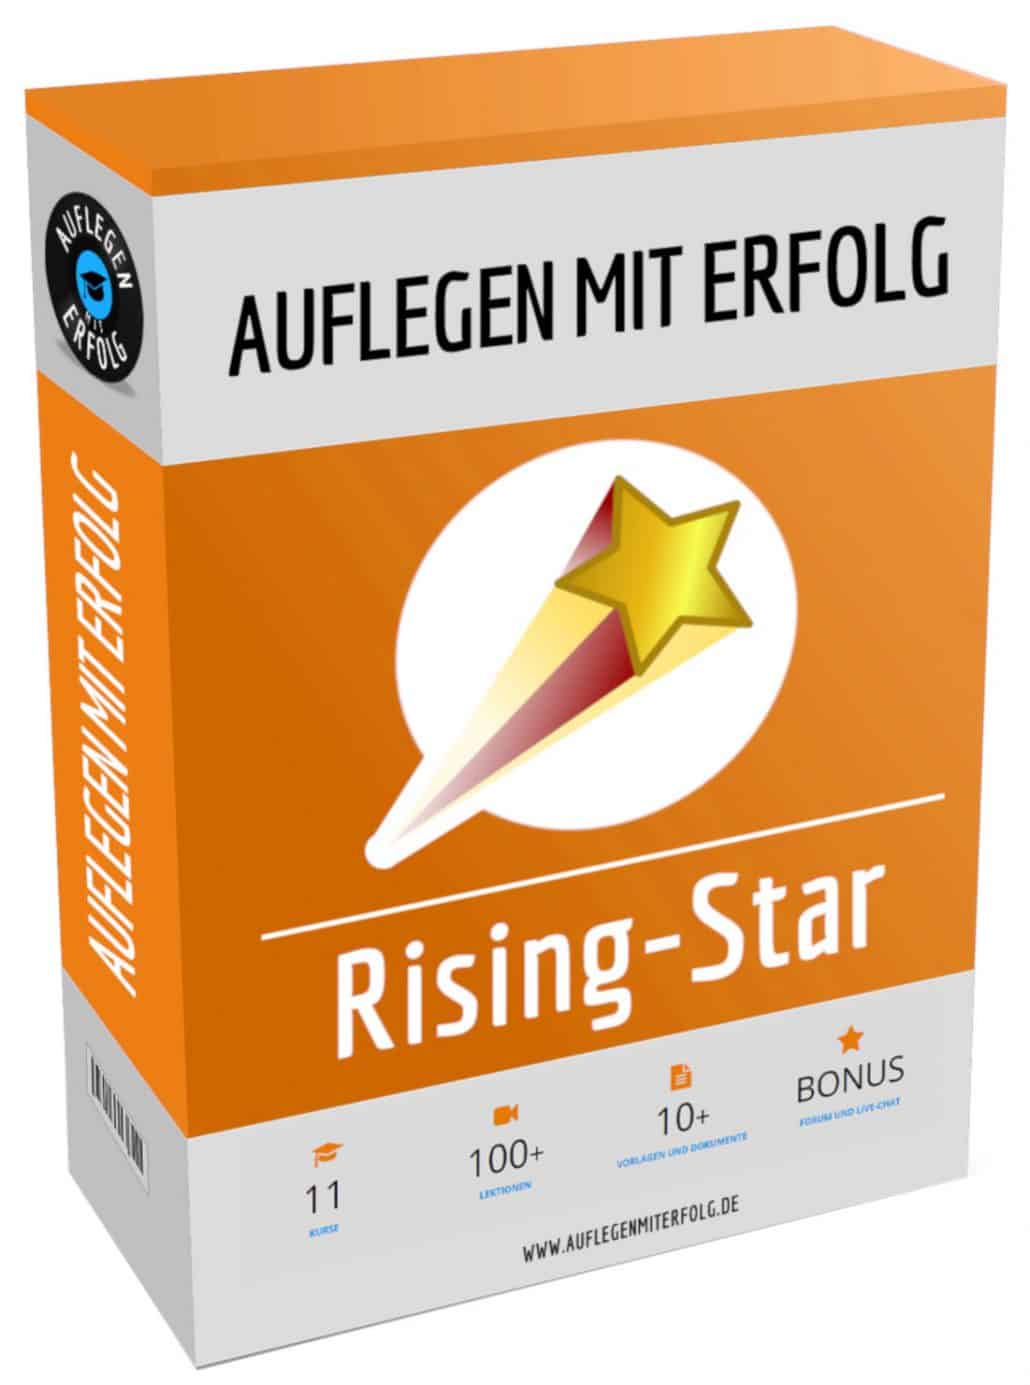 Rising-Star